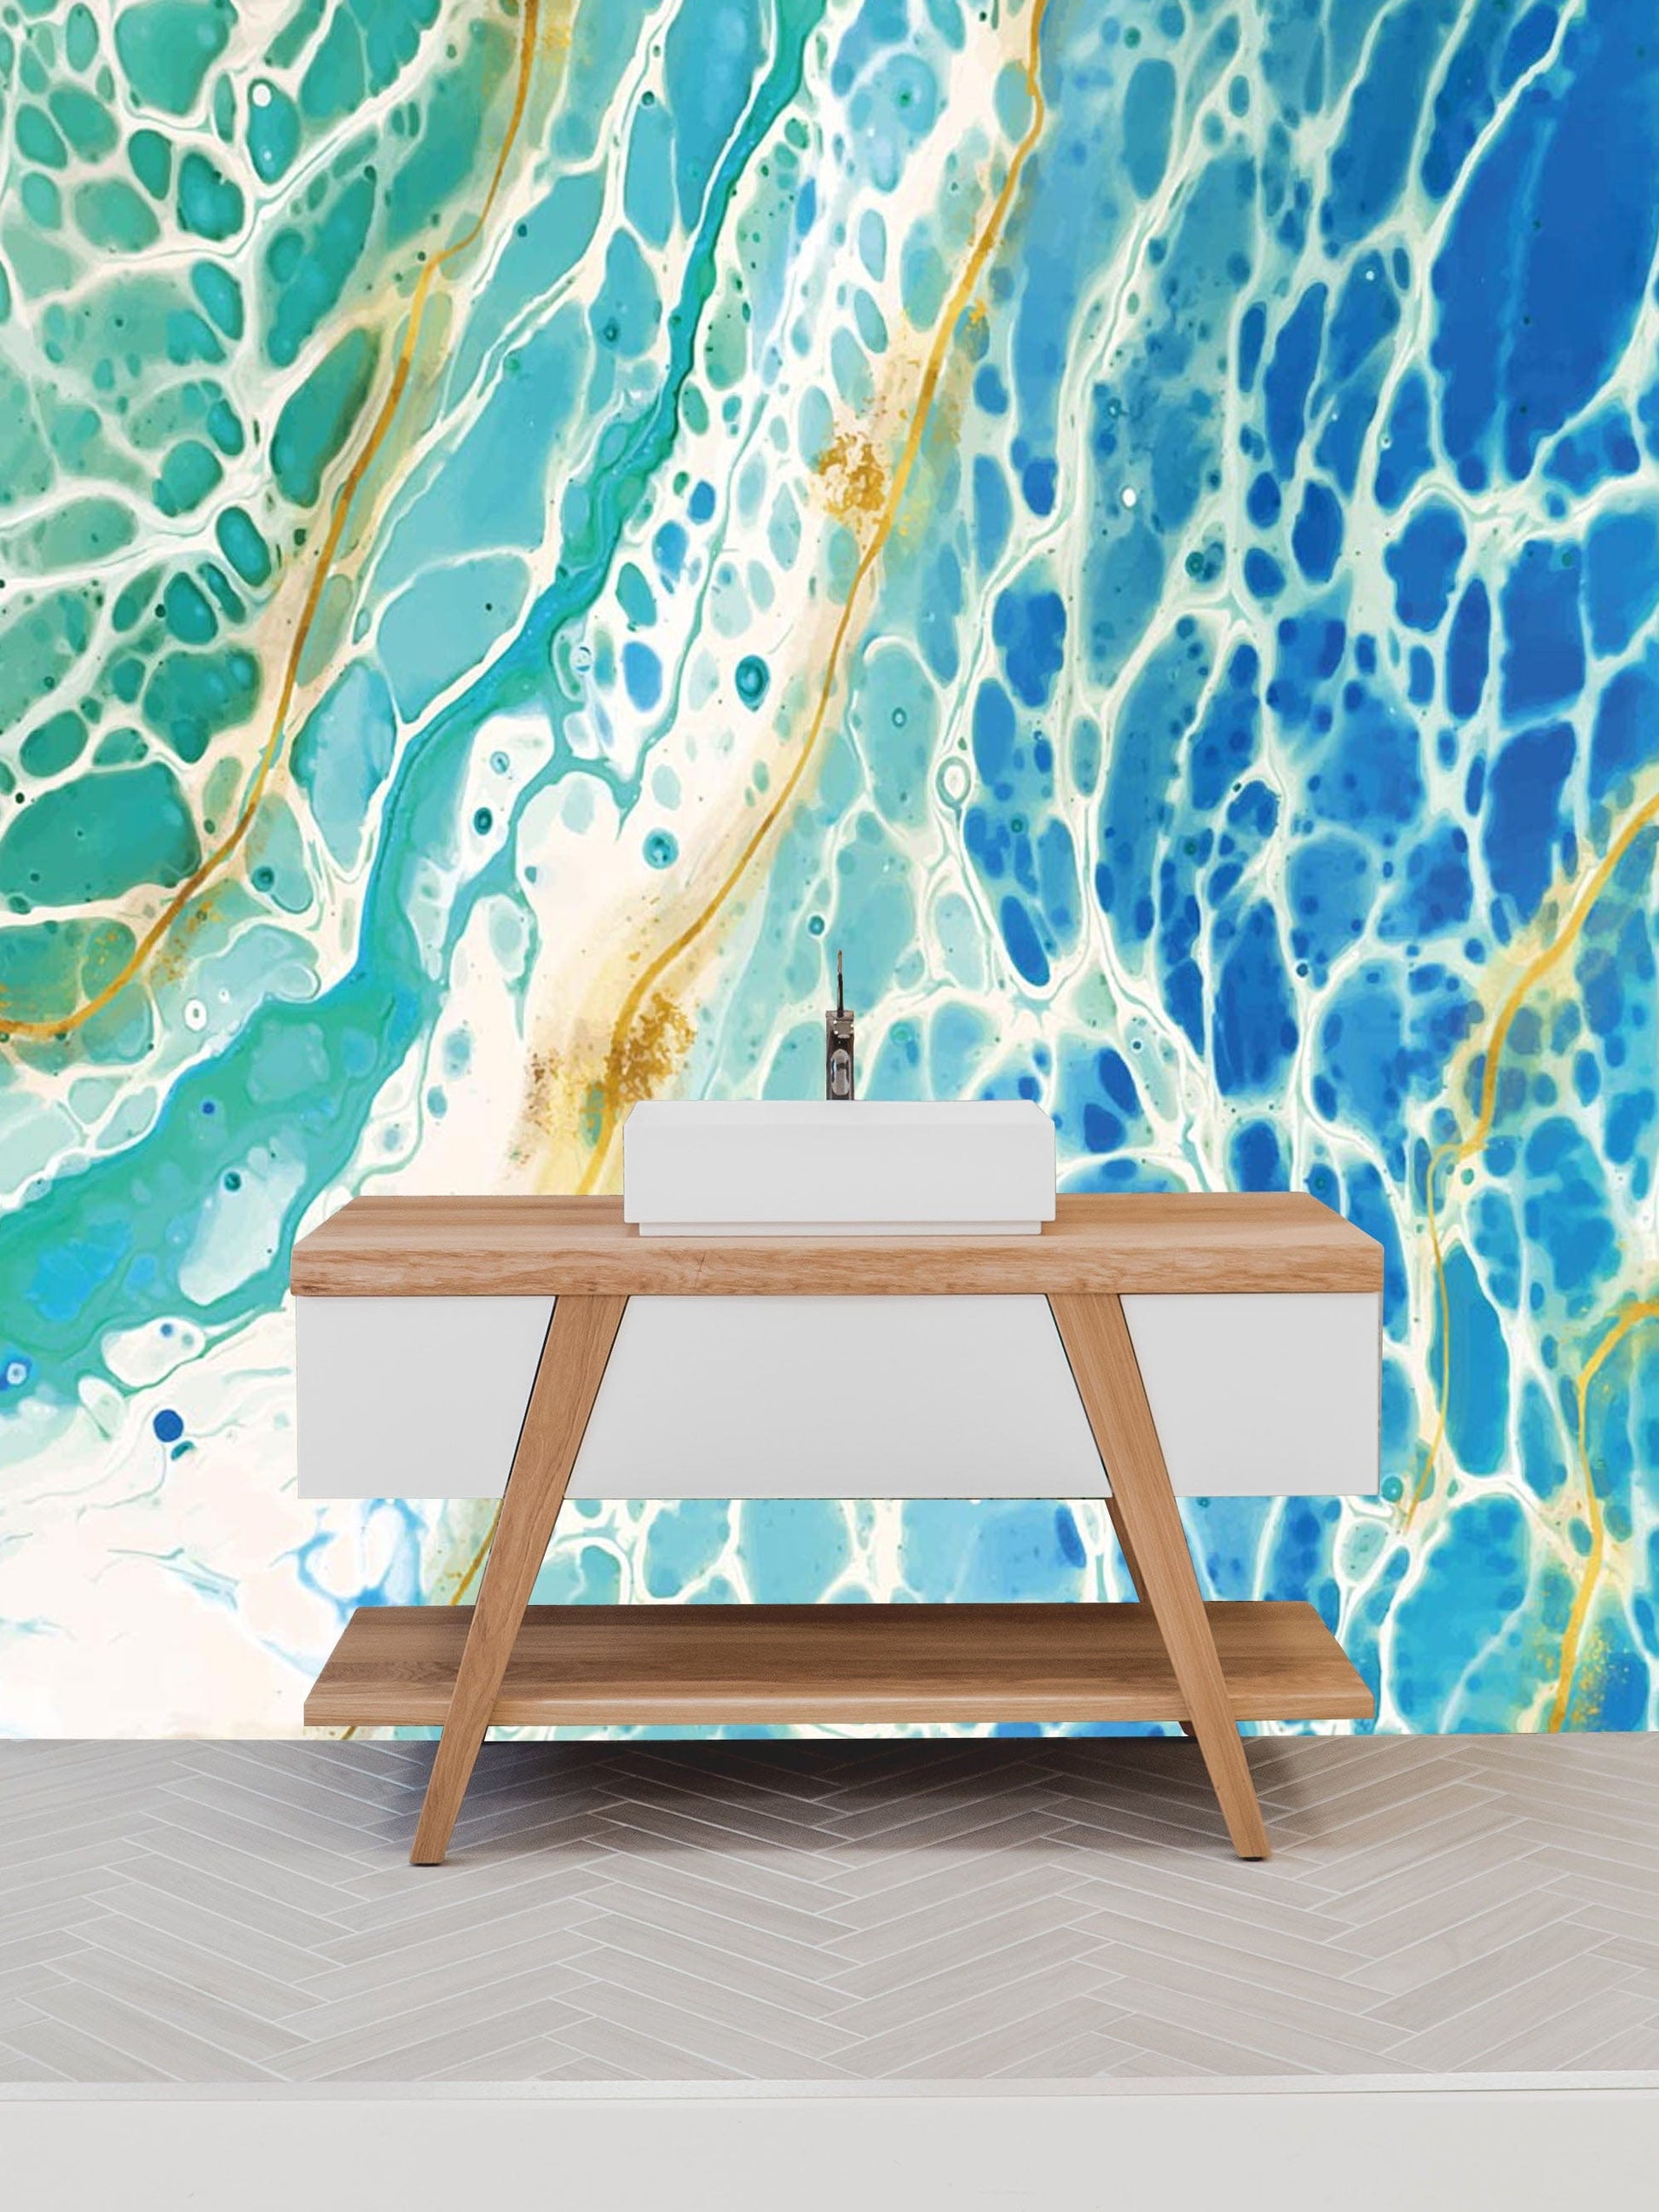 Aquarium Marble Wallpaper Mural for Living Room Design